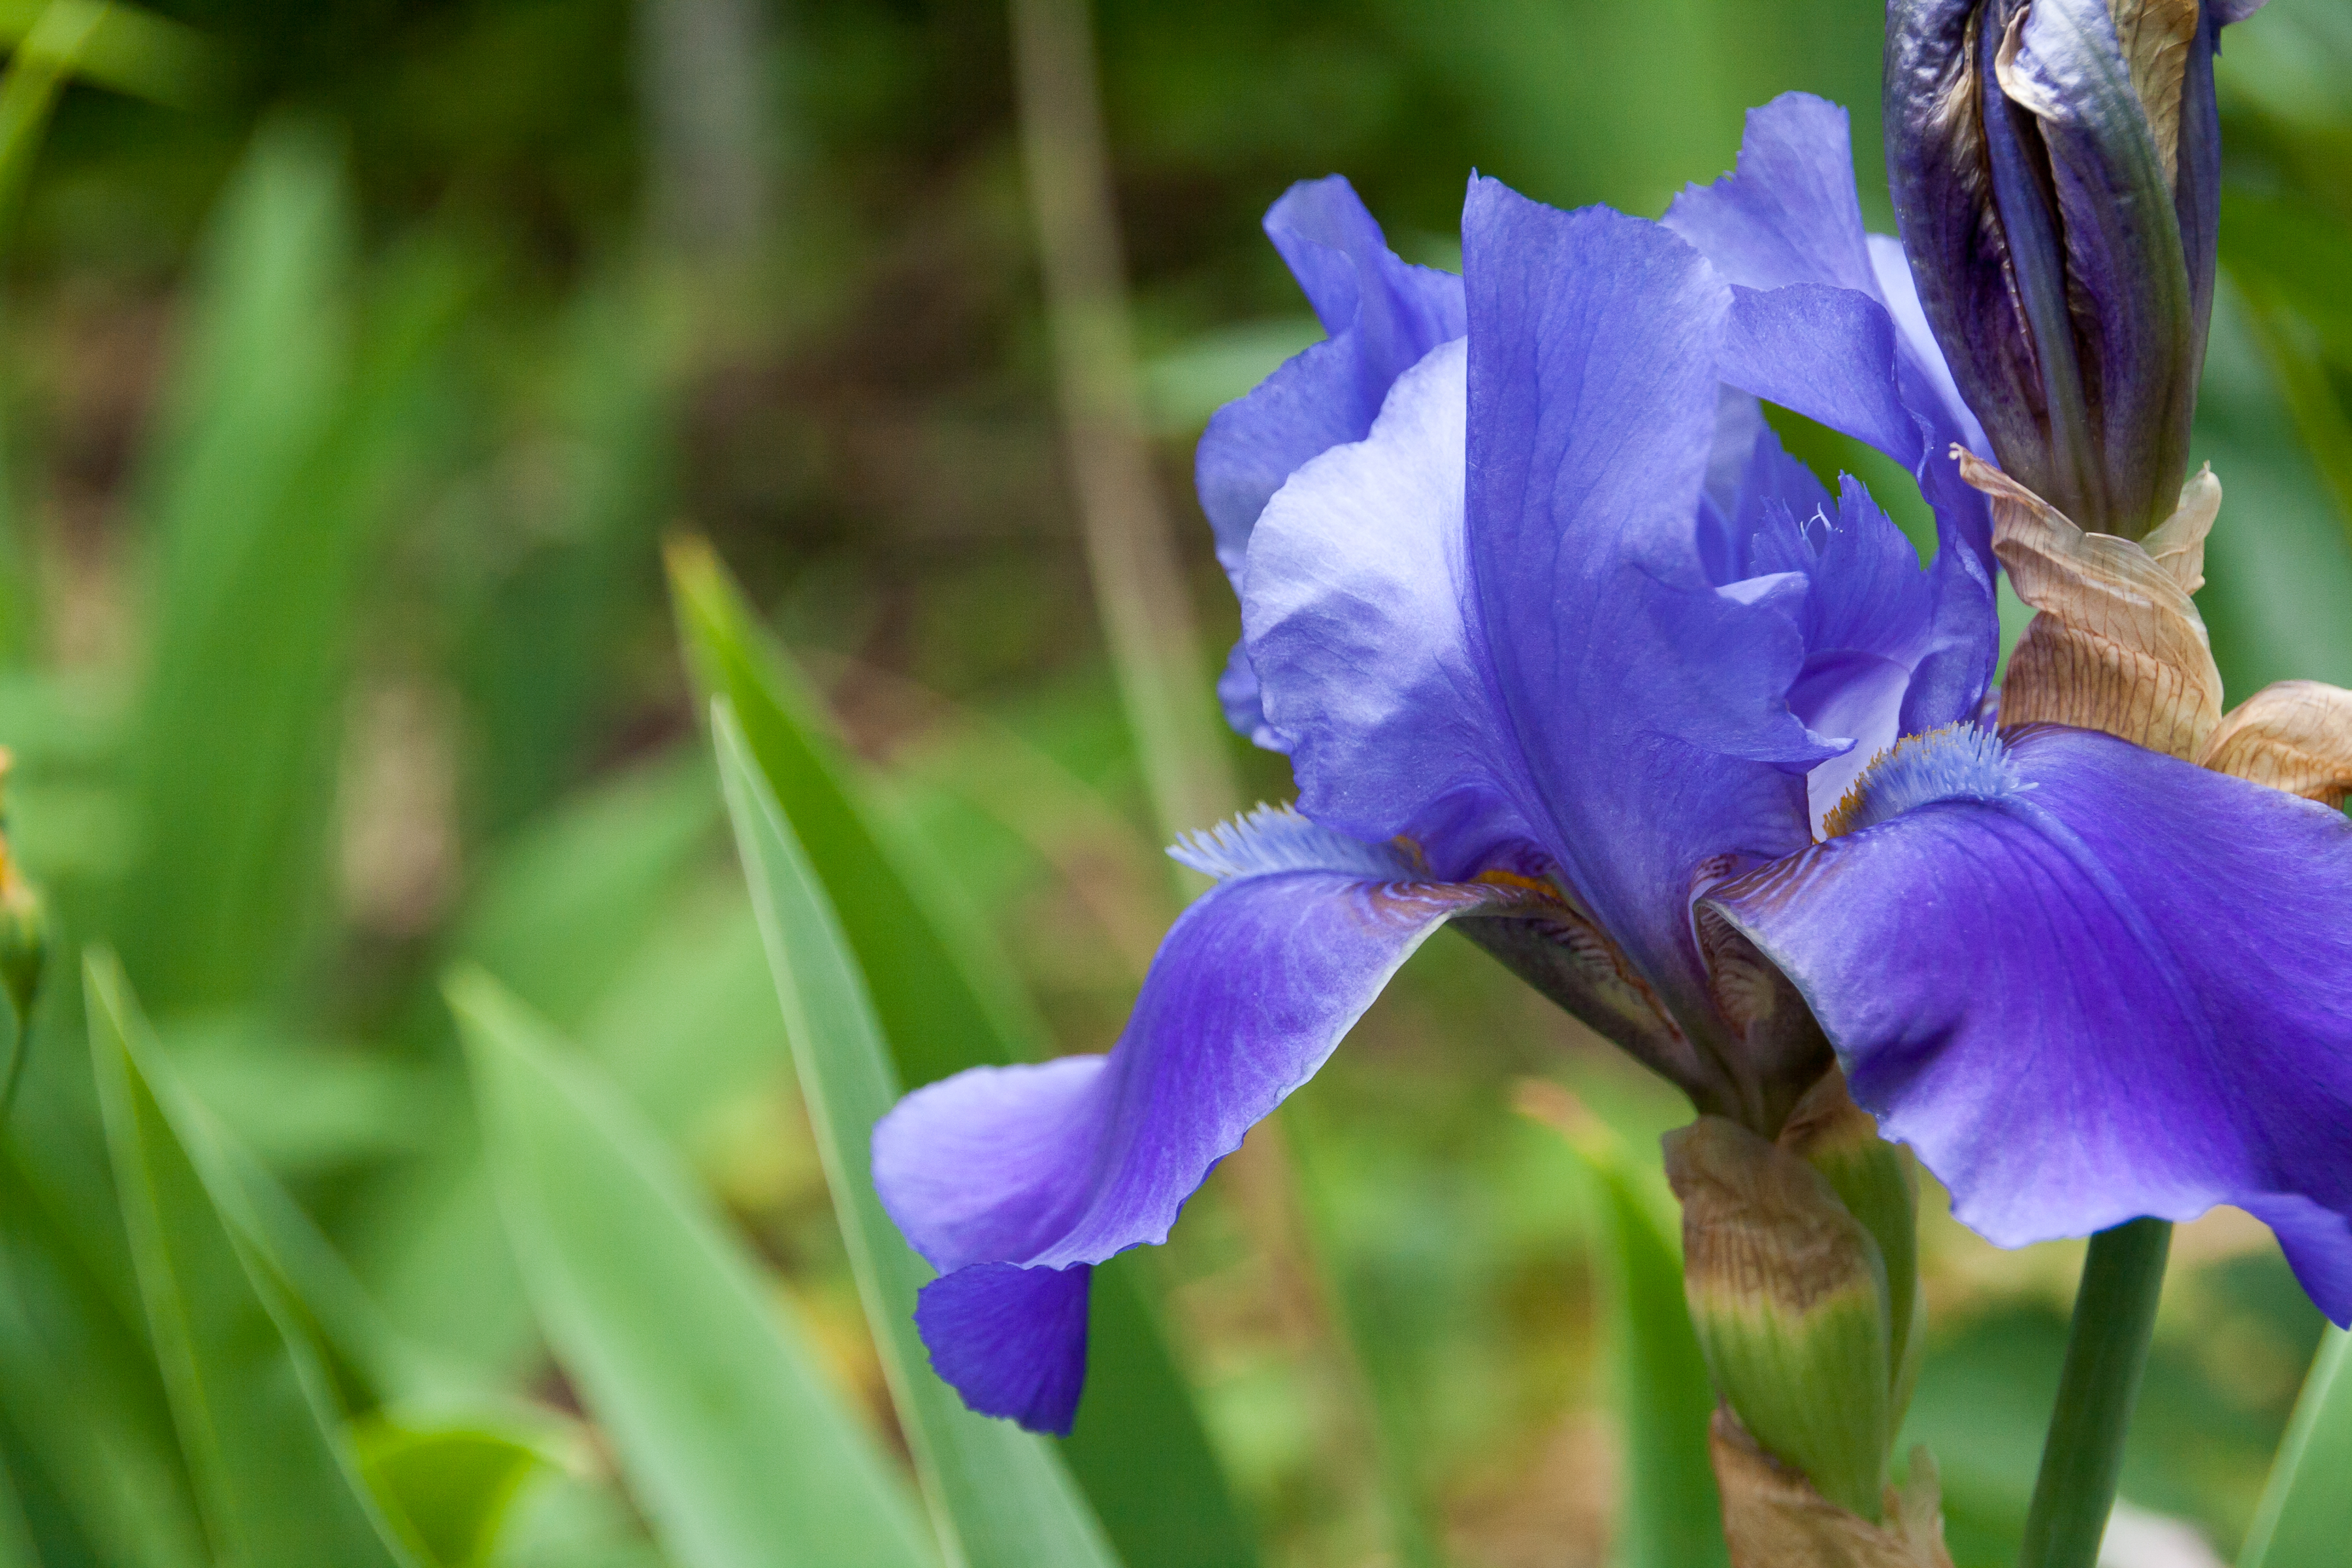 Blue flower photo